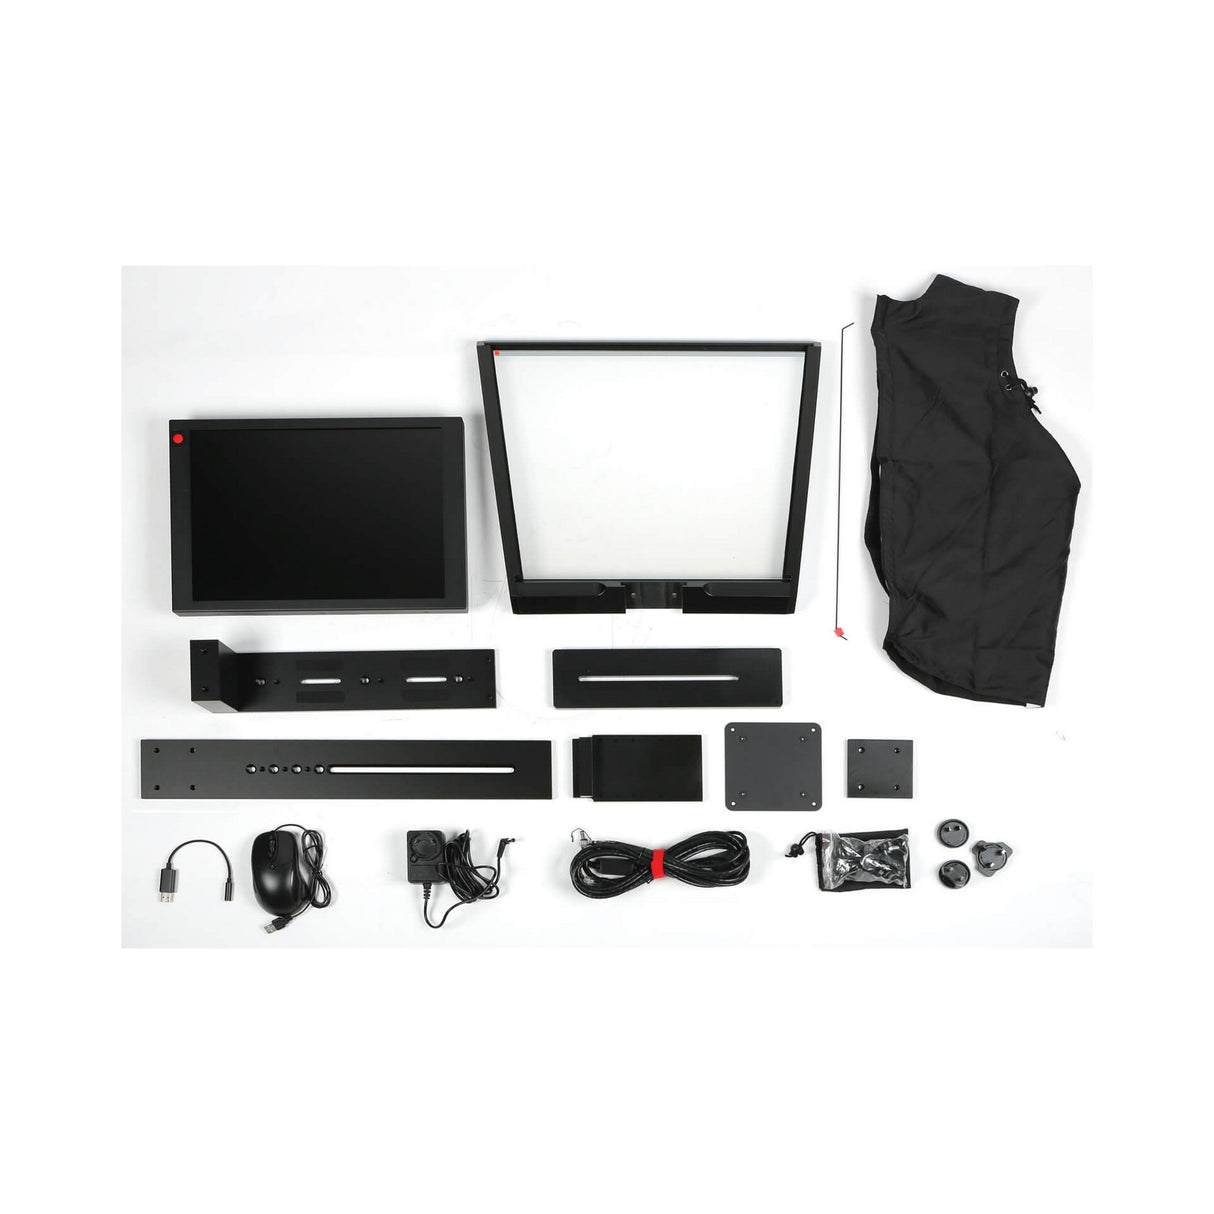 Datavideo TP-700 Large Screen Prompter Kit for ENG Cameras